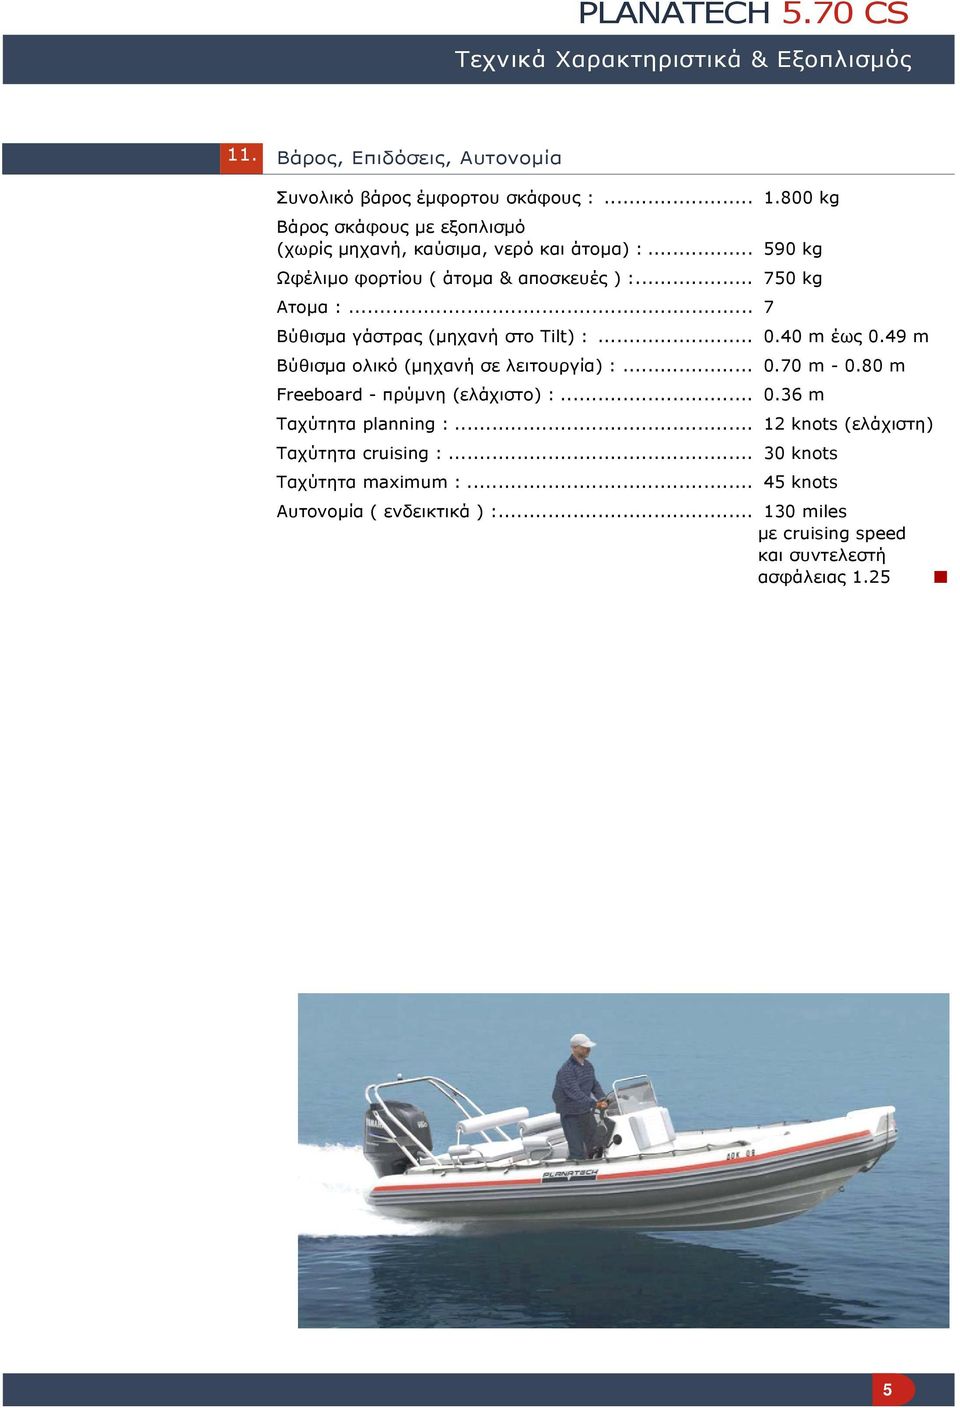 49 m Bύθισμα ολικό (μηχανή σε λειτουργία) :... 0.70 m - 0.80 m Freeboard - πρύμνη (ελάχιστο) :... 0.36 m Ταχύτητα planning :.